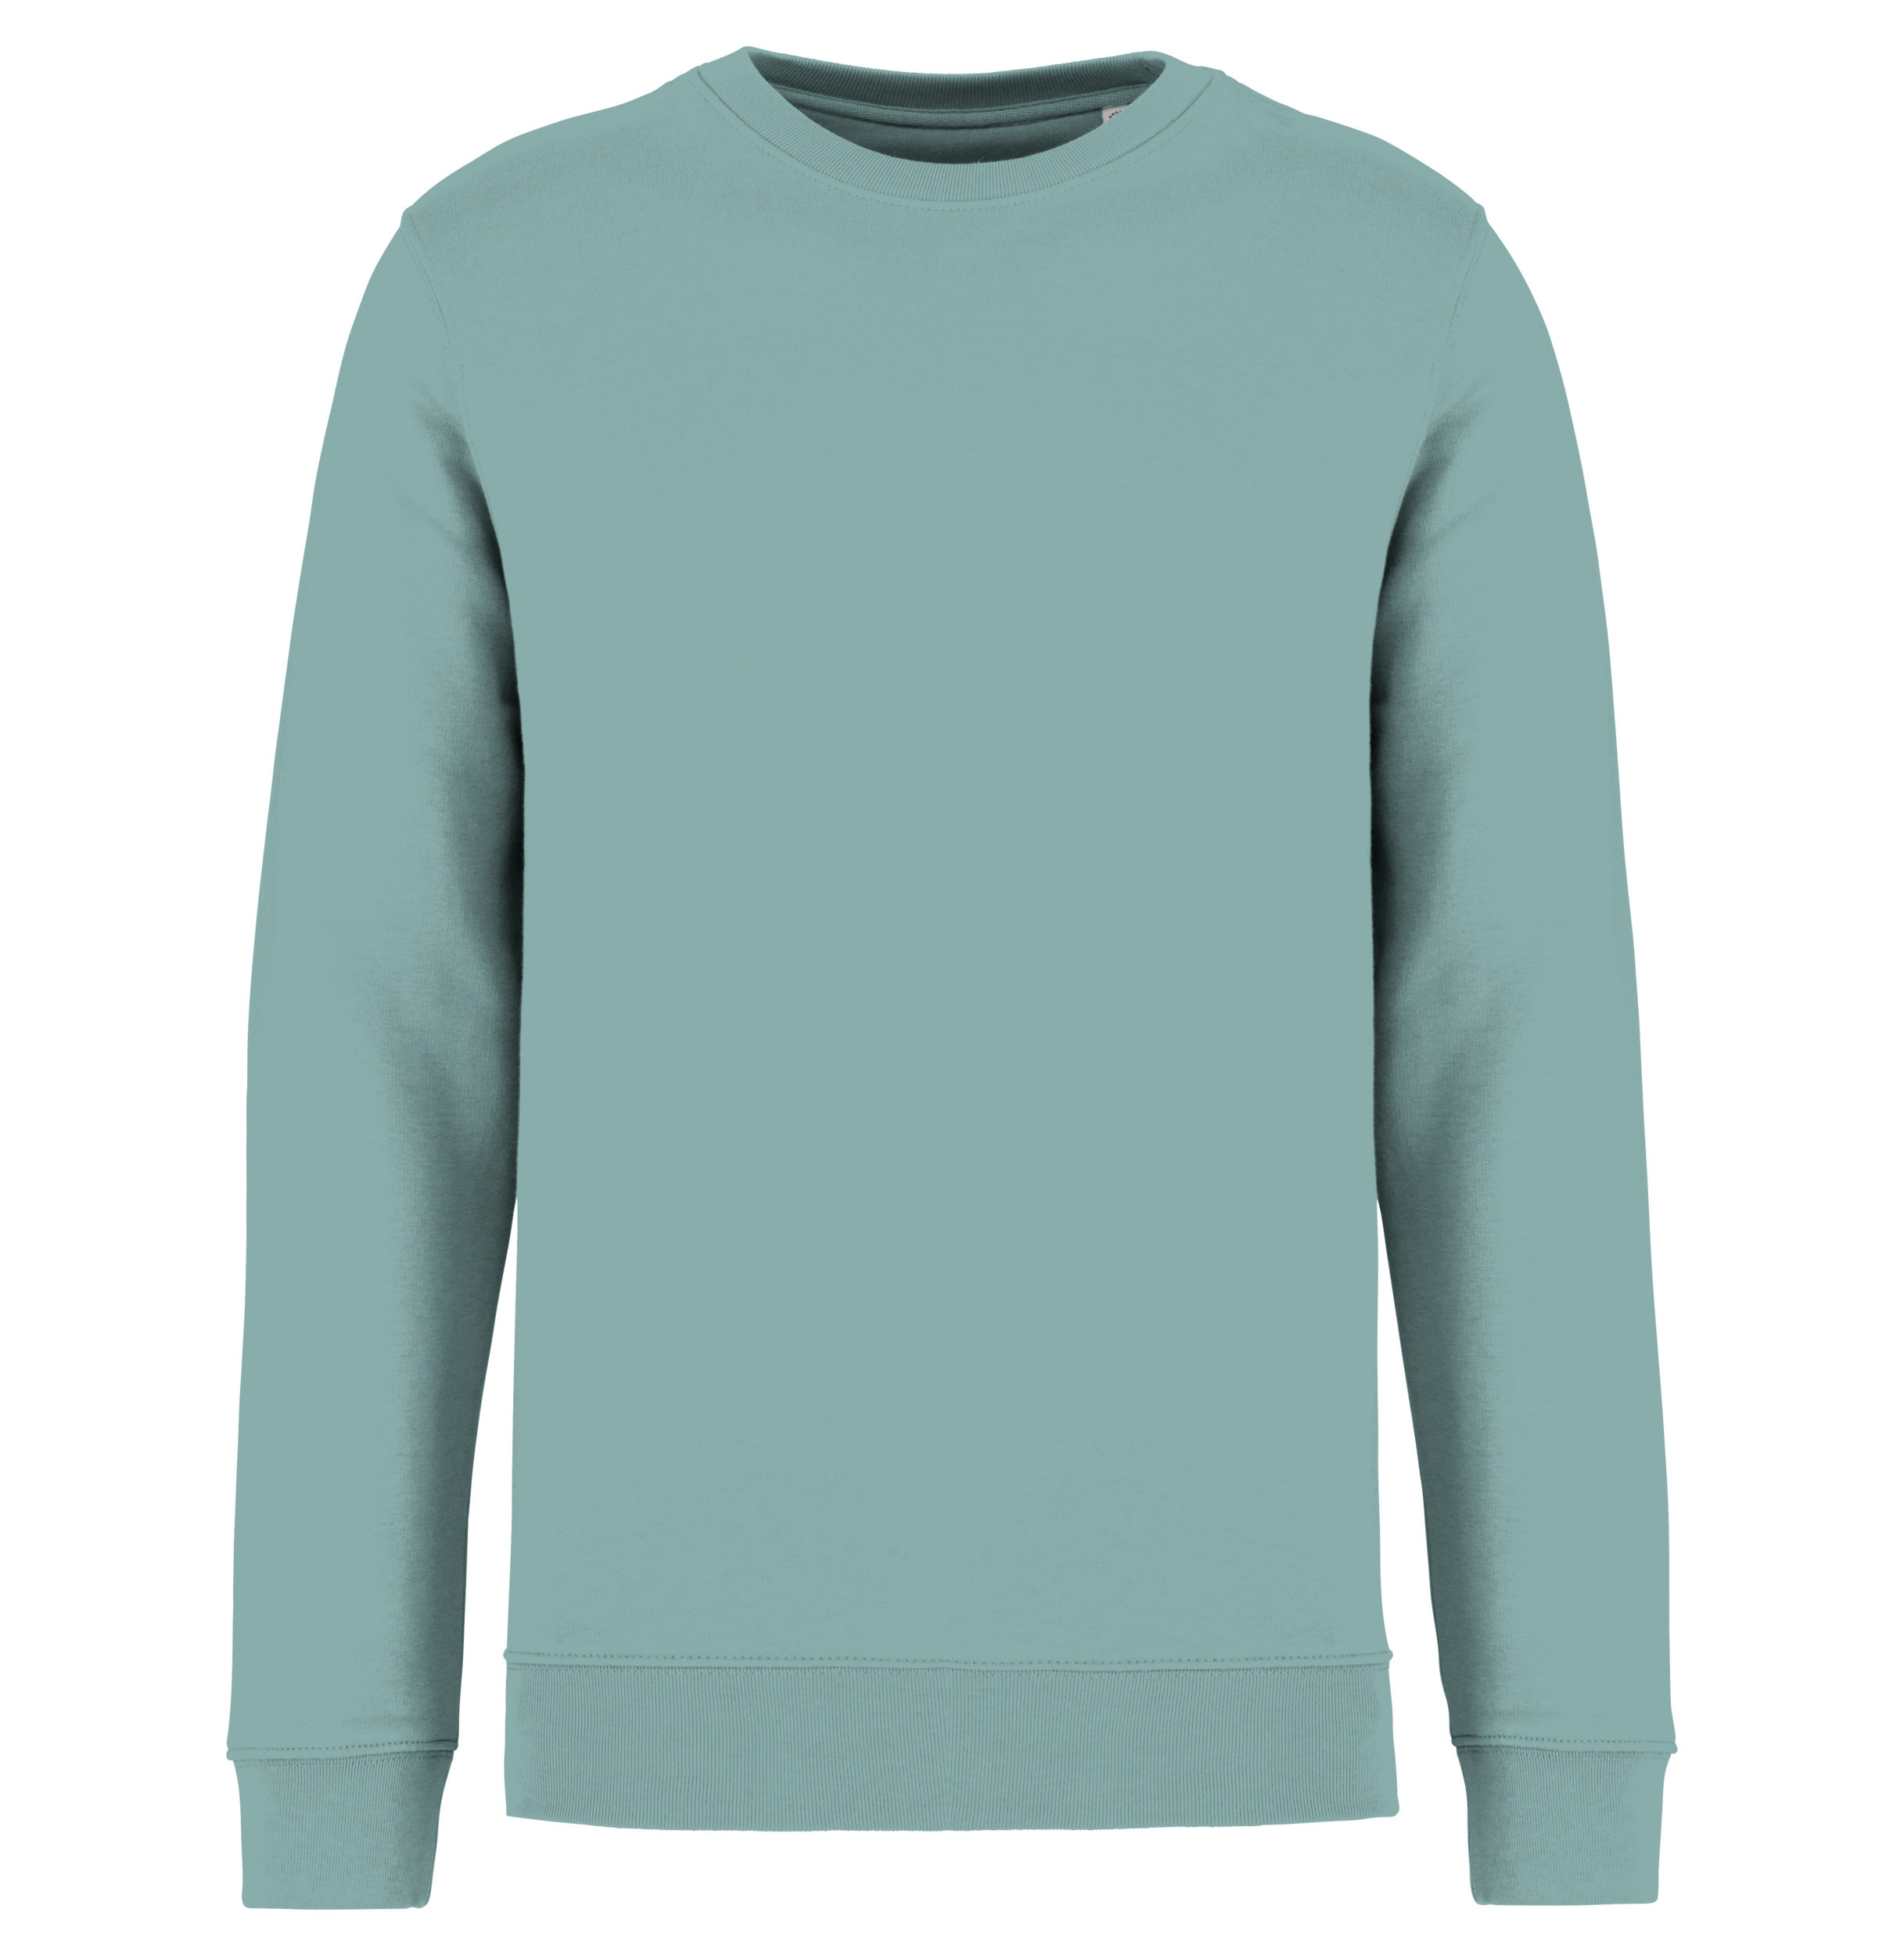 Unisex organic cotton sweatshirt 350 g/m² cotton ART®